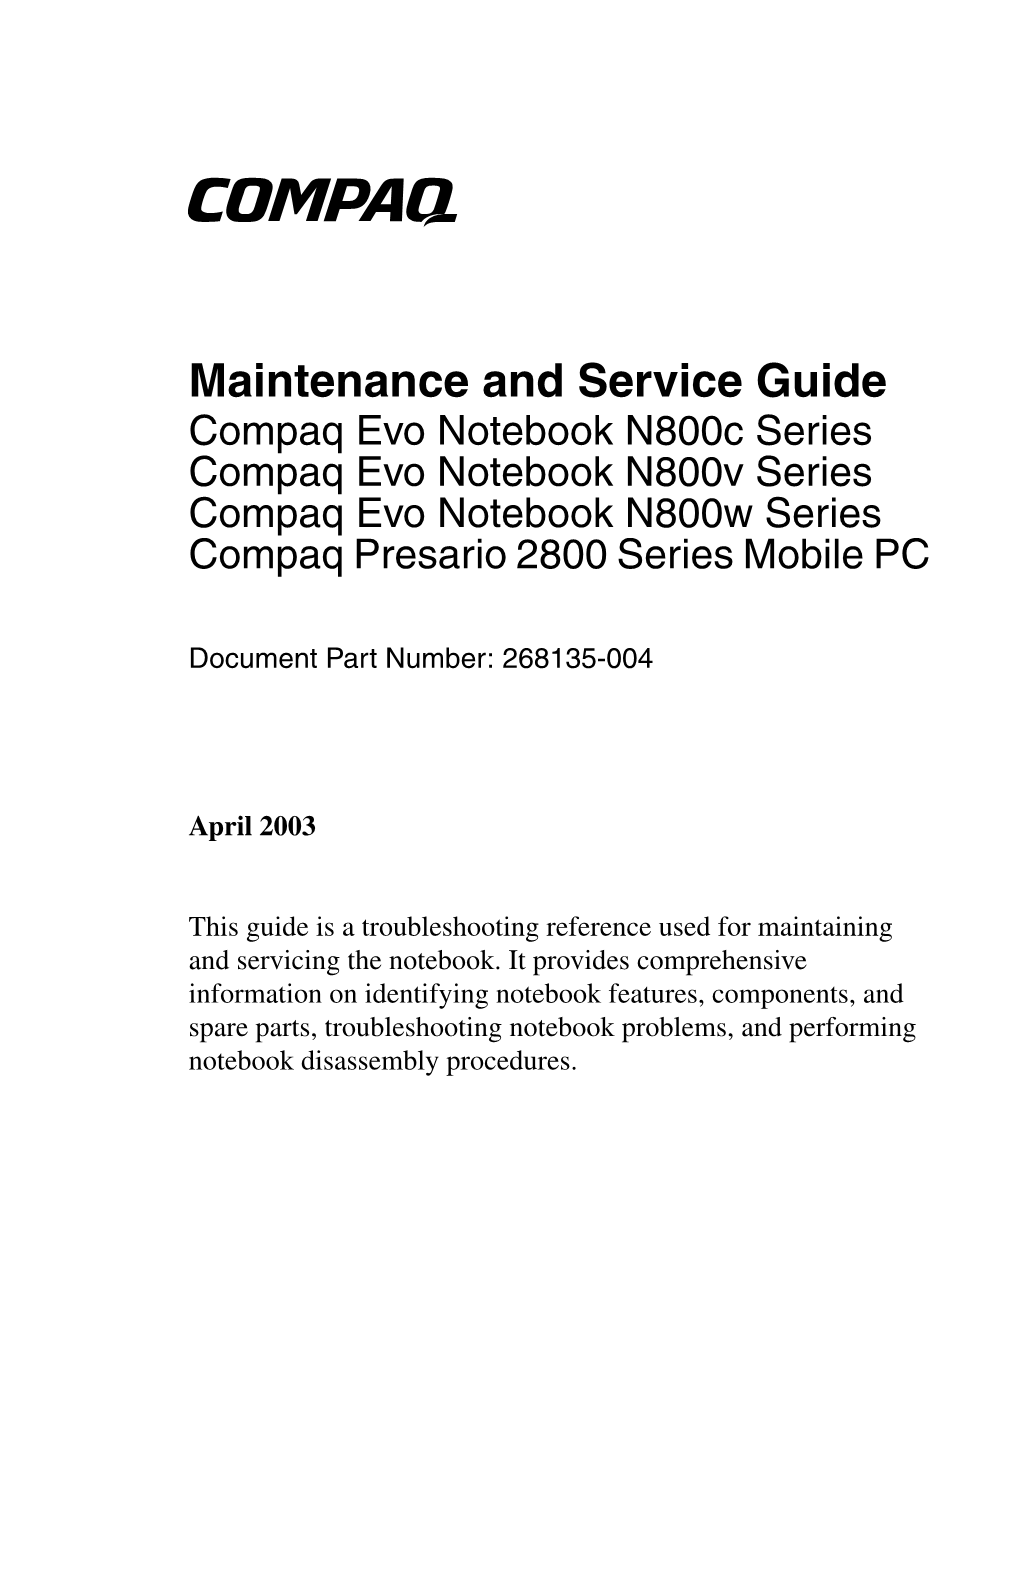 Maintenance and Service Guide Compaq Evo Notebook N800c Series Compaq Evo Notebook N800v Series Compaq Evo Notebook N800w Series Compaq Presario 2800 Series Mobile PC